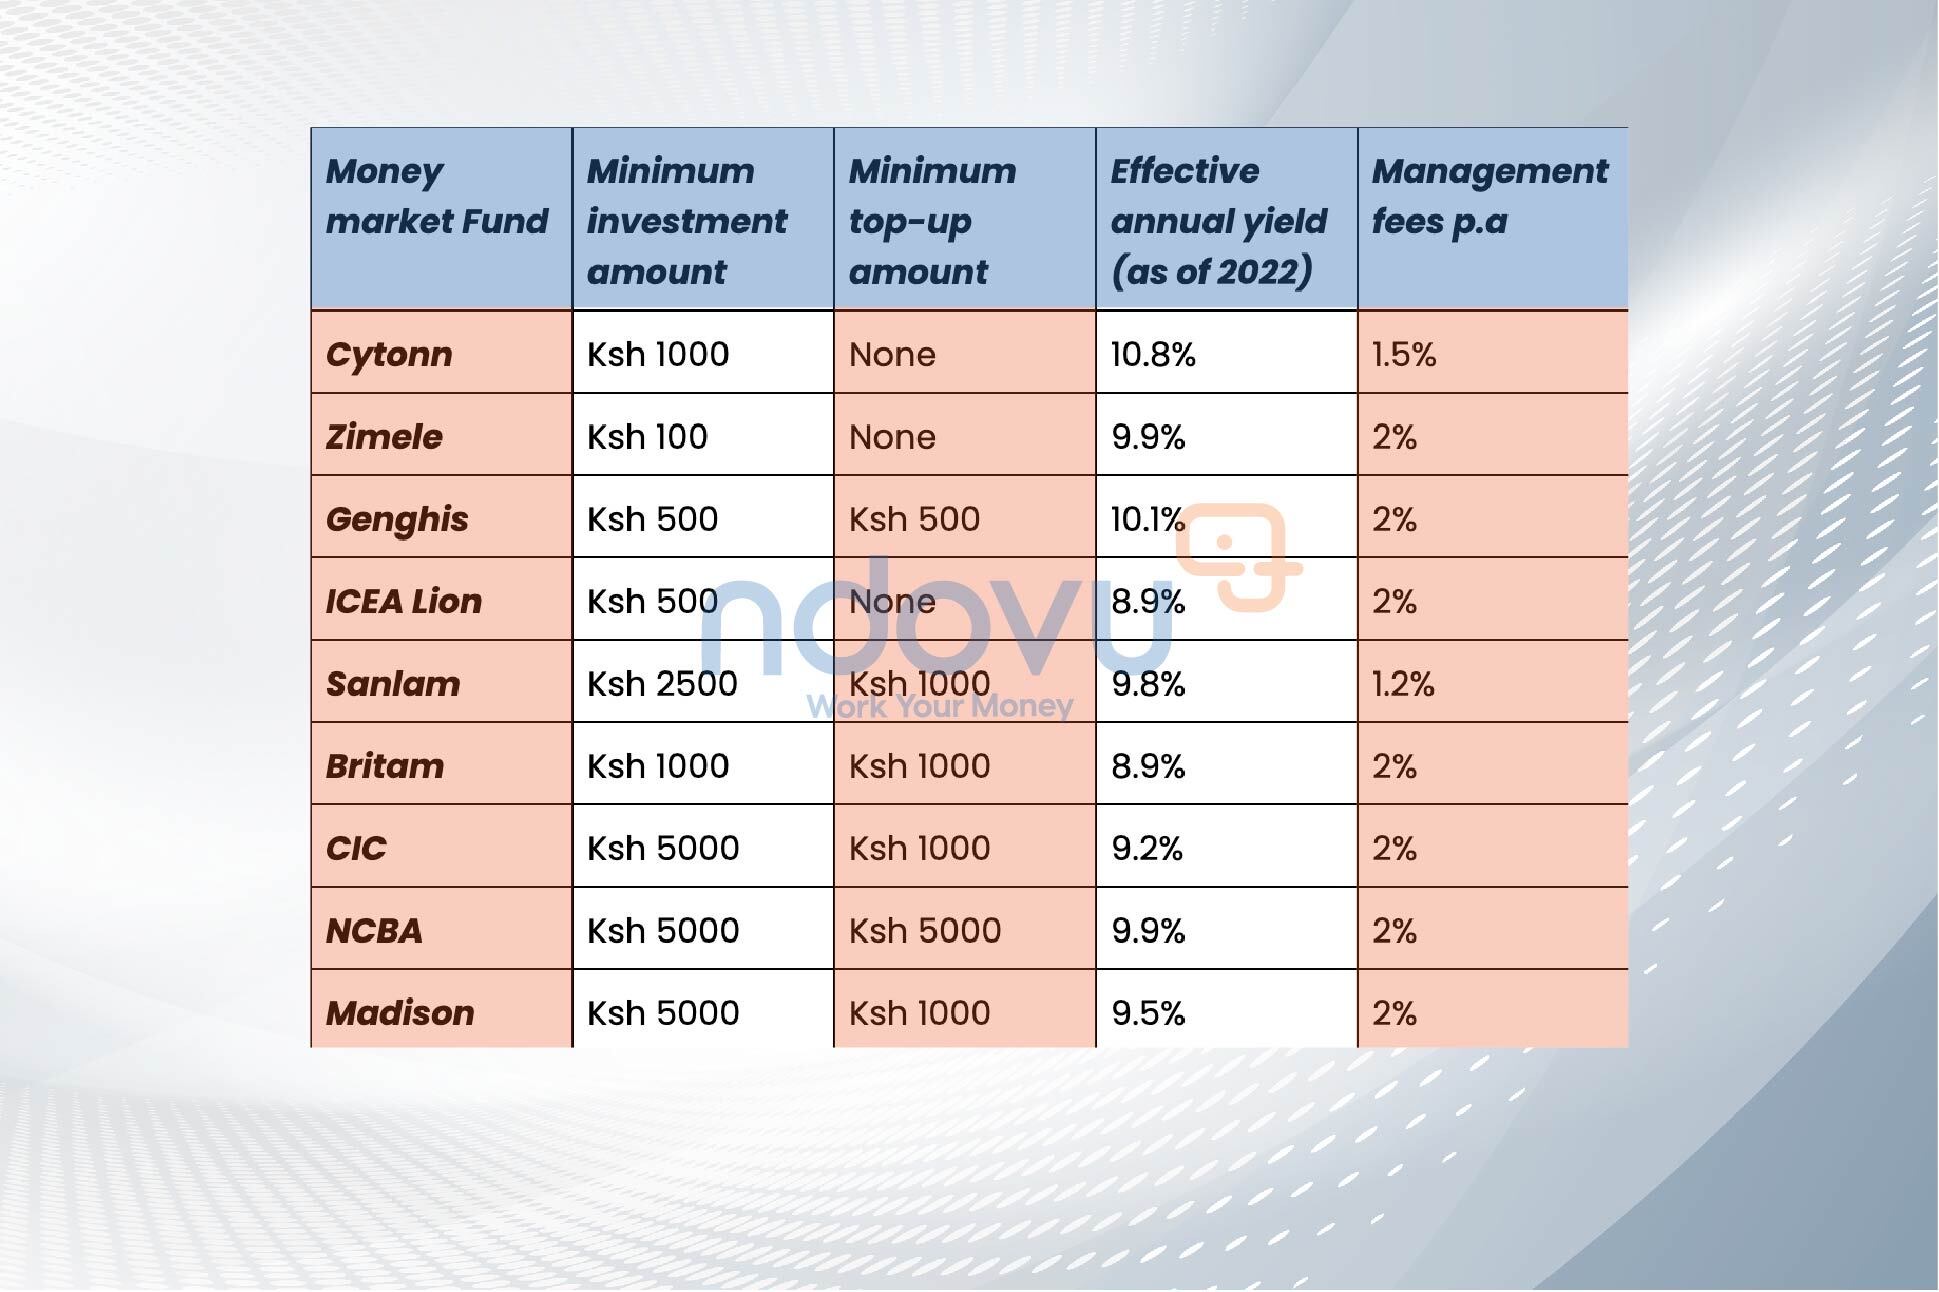 Comparison of different money market funds in Kenya